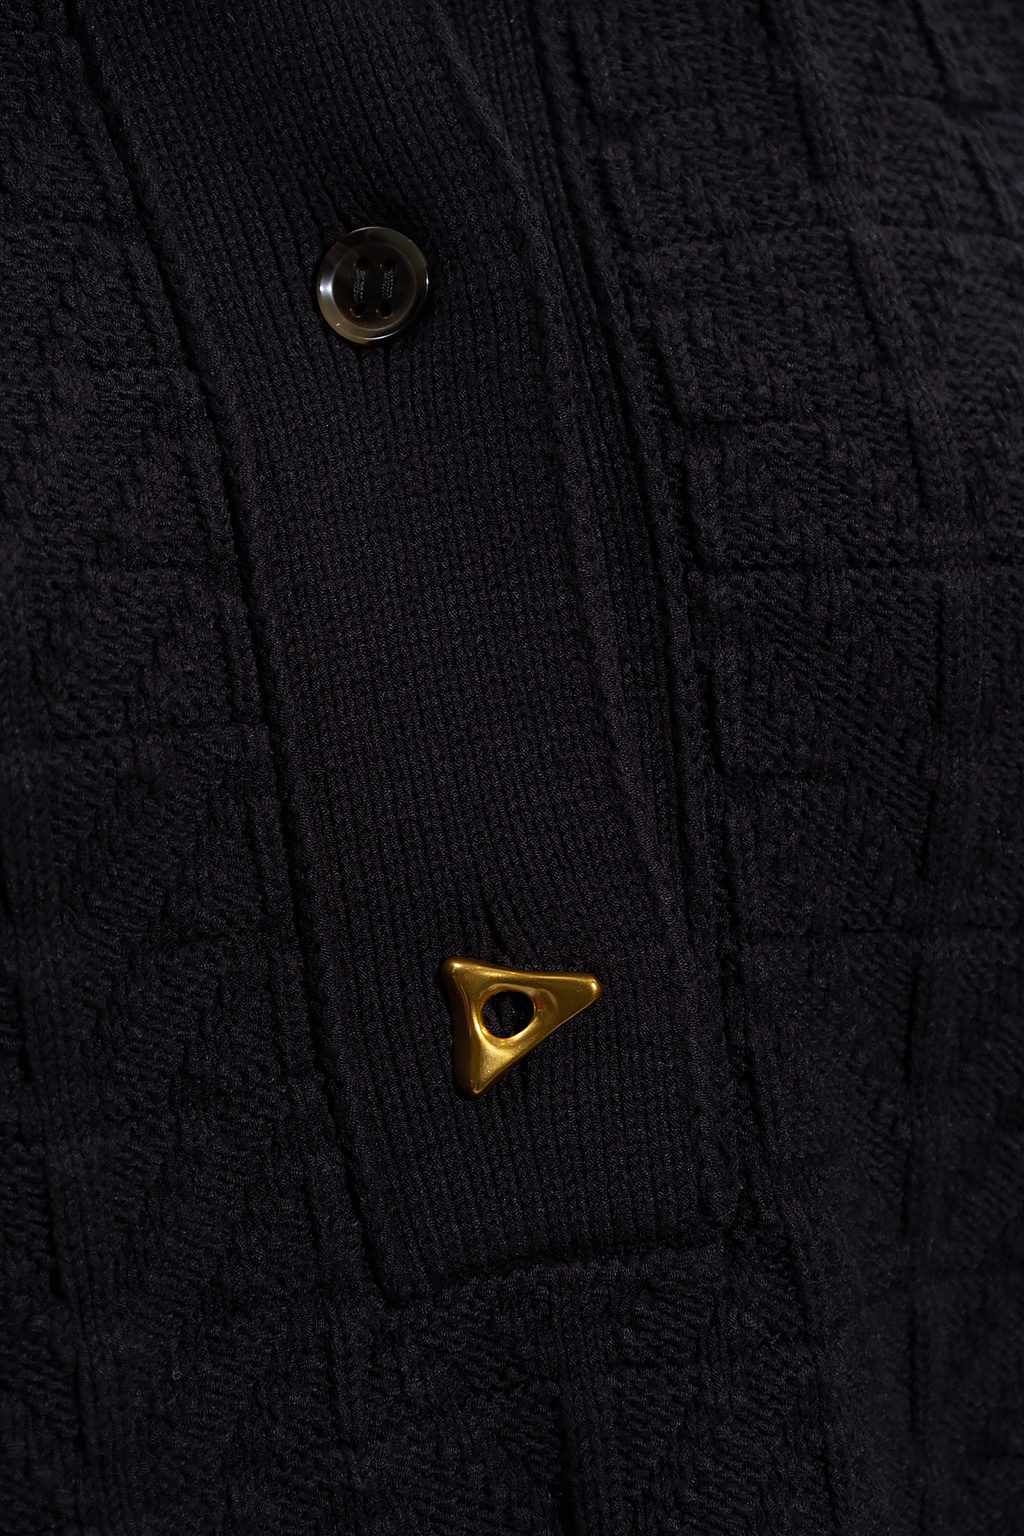 Aeron ‘Bay’ sweater with collar